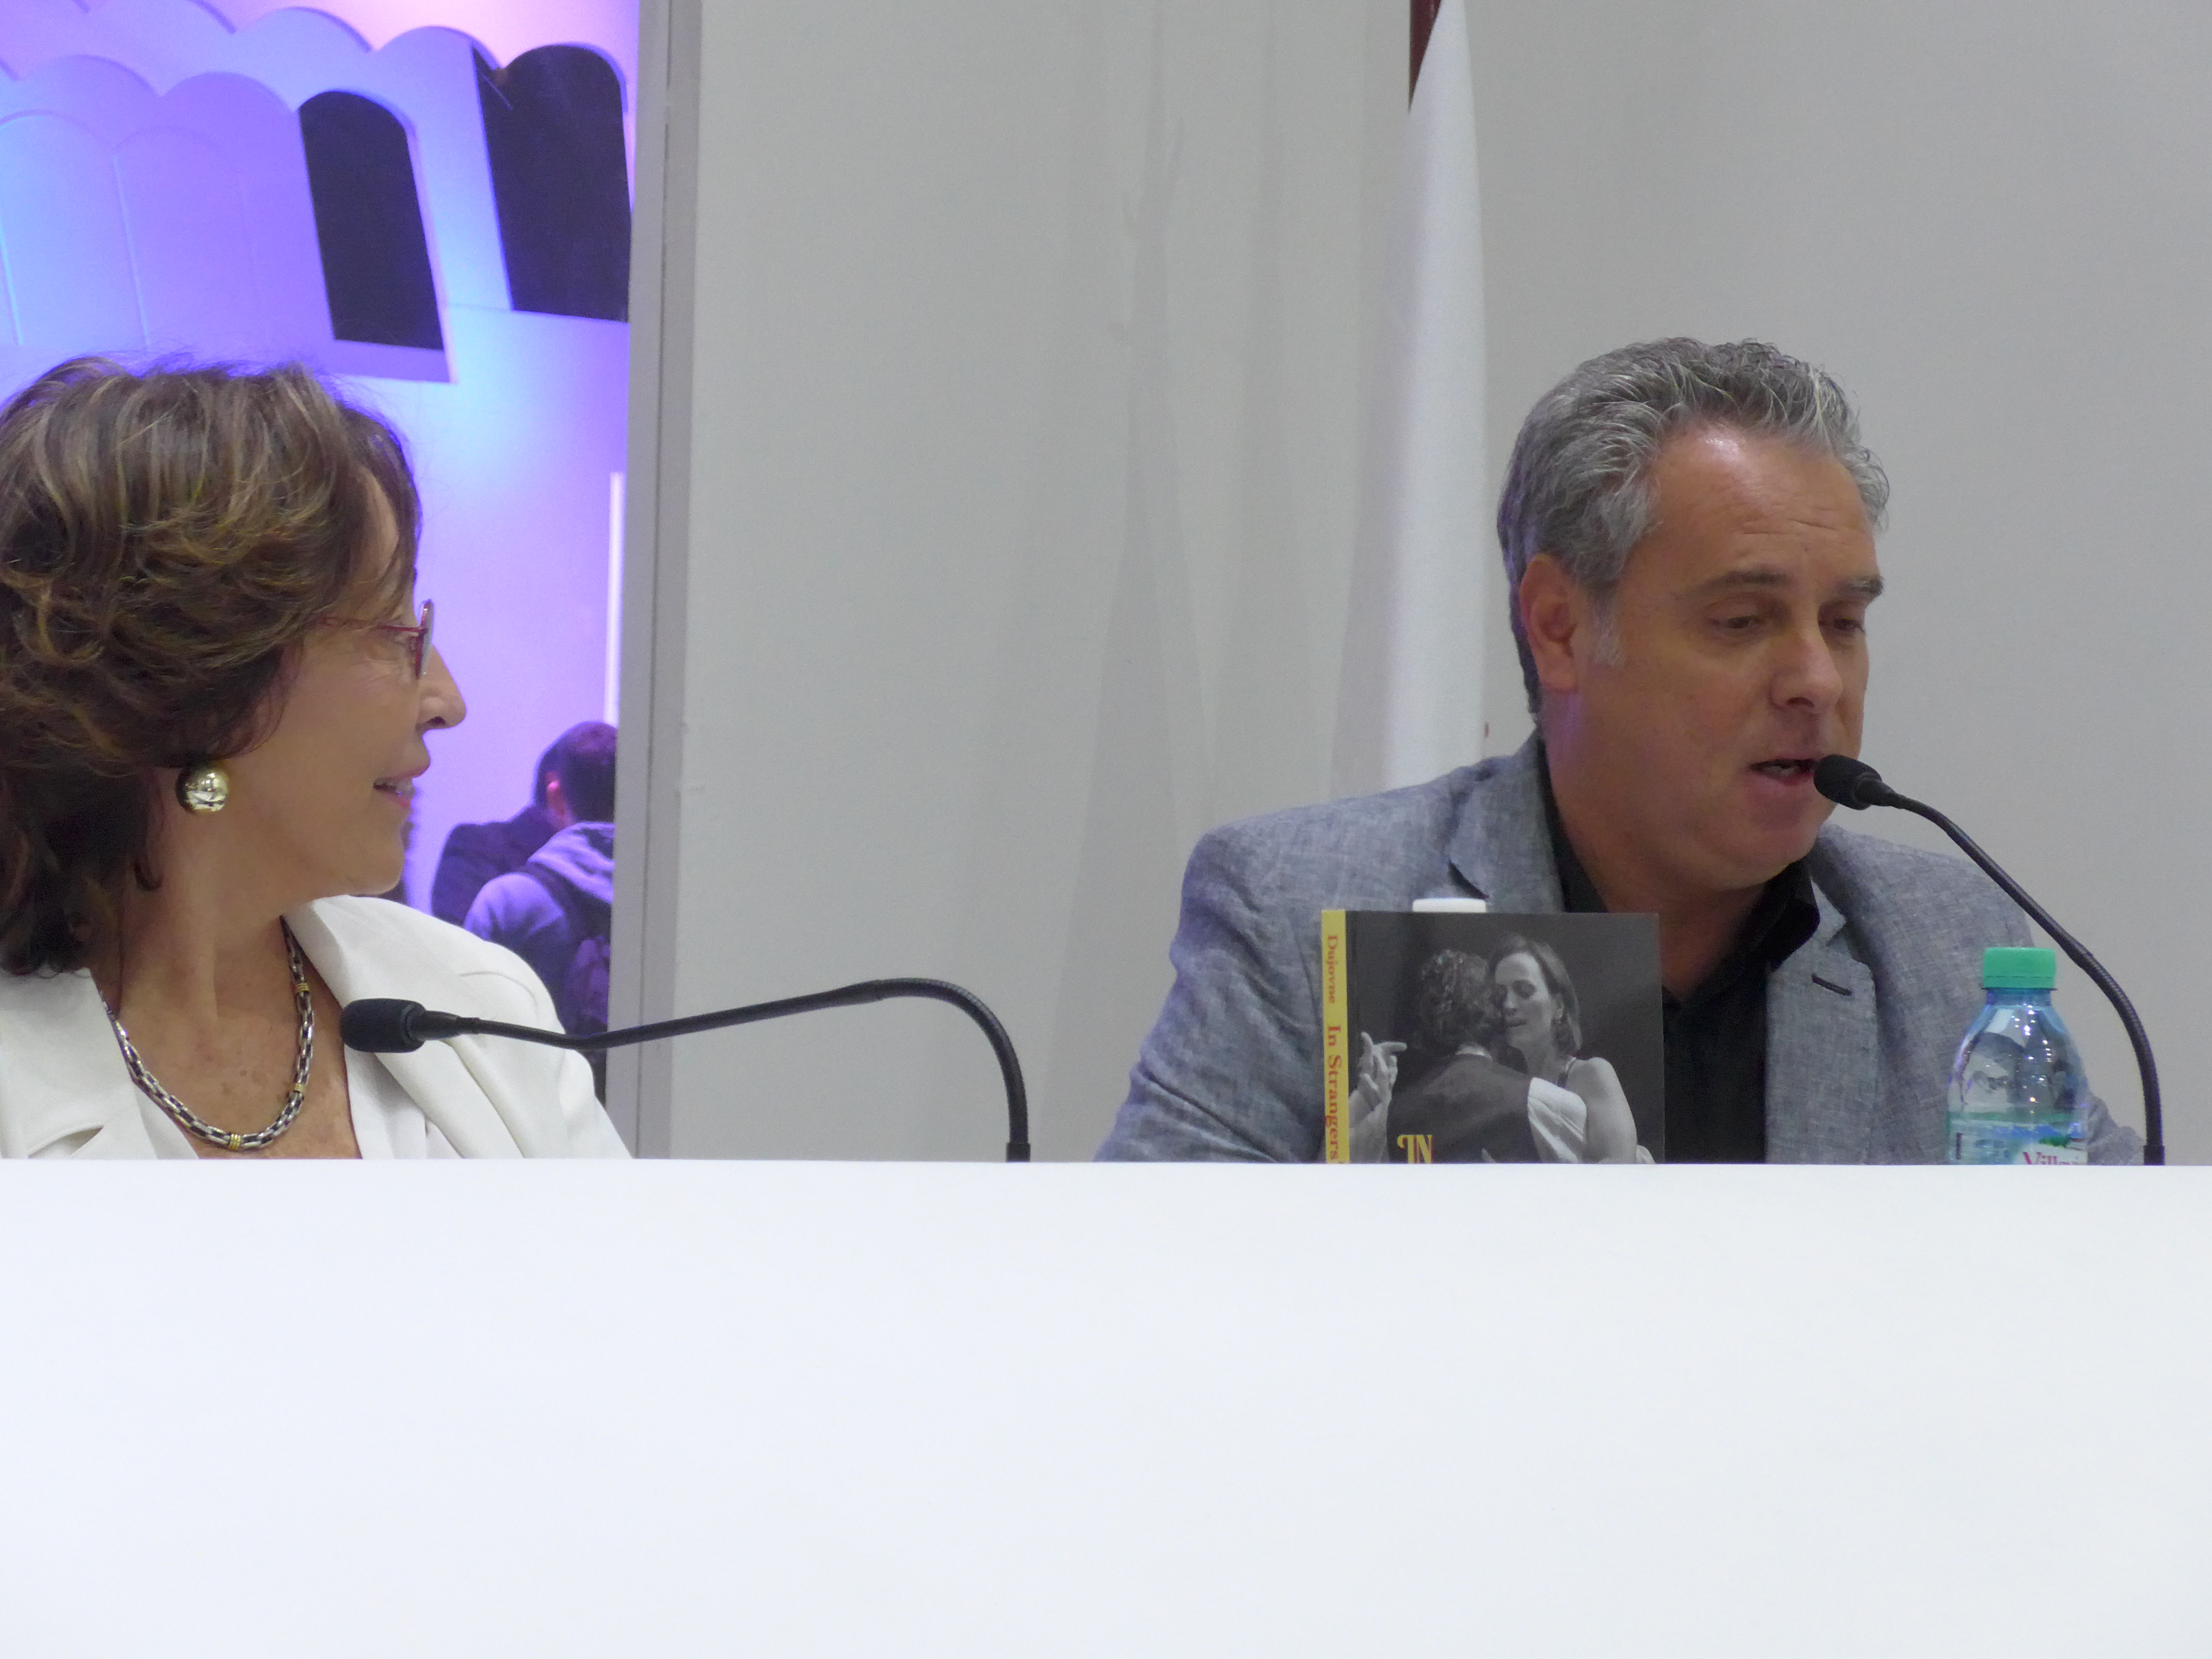 Daniel del Sol, diputado de la Legislatura Porteña, introduces Beatriz